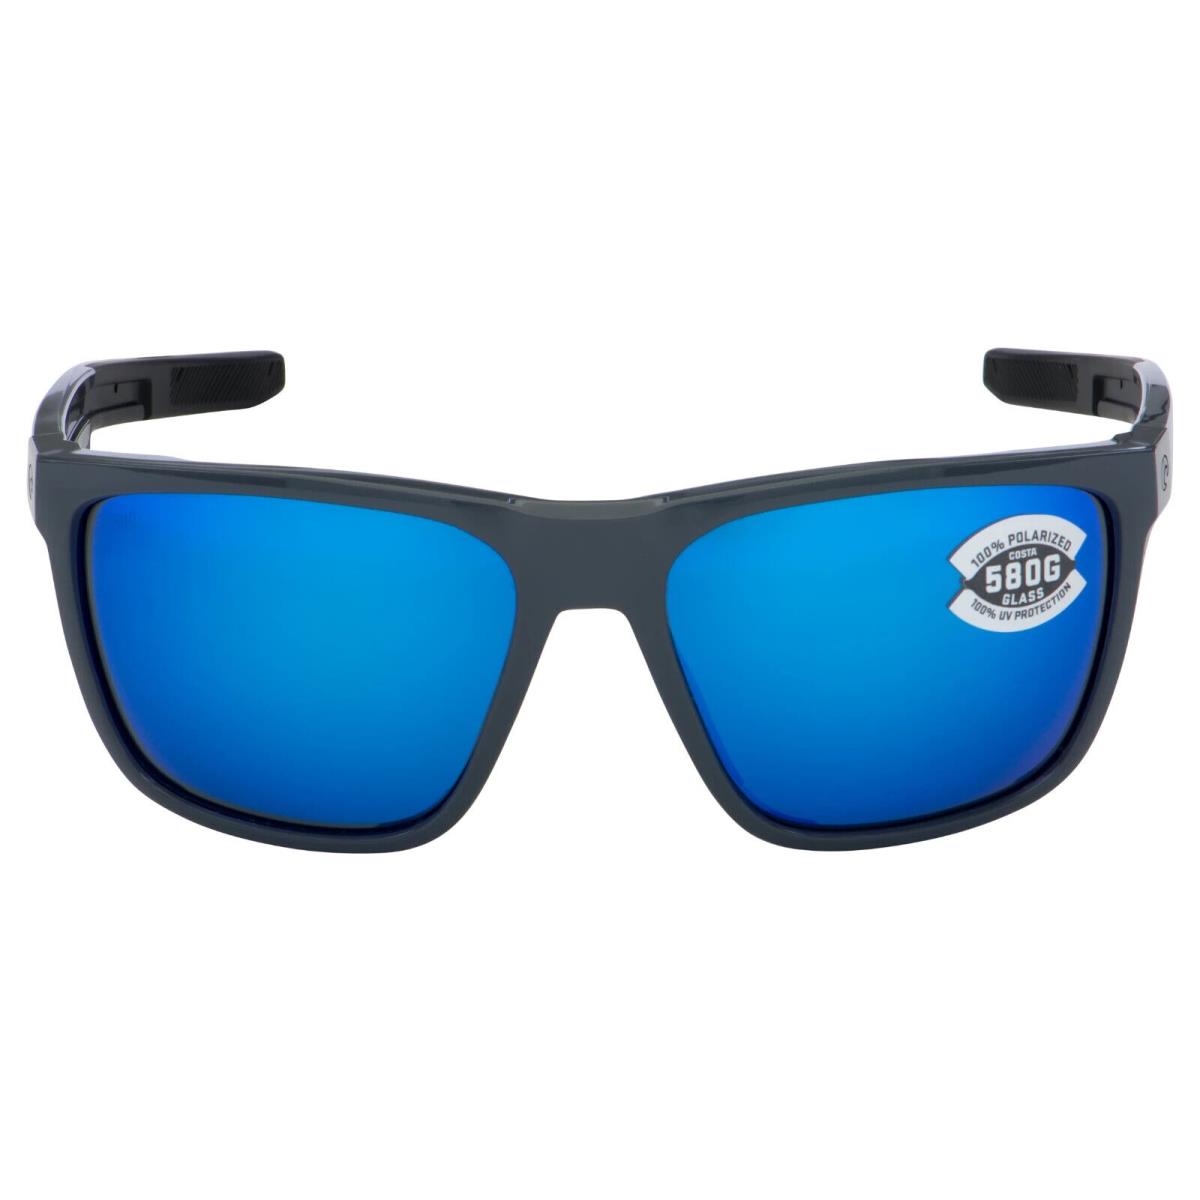 Costa Del Mar Frg 298 Obmglp Ferg Shiny Gray Sunglasses Blue Mirror 580G Lens - Frame: Gray, Lens: Blue